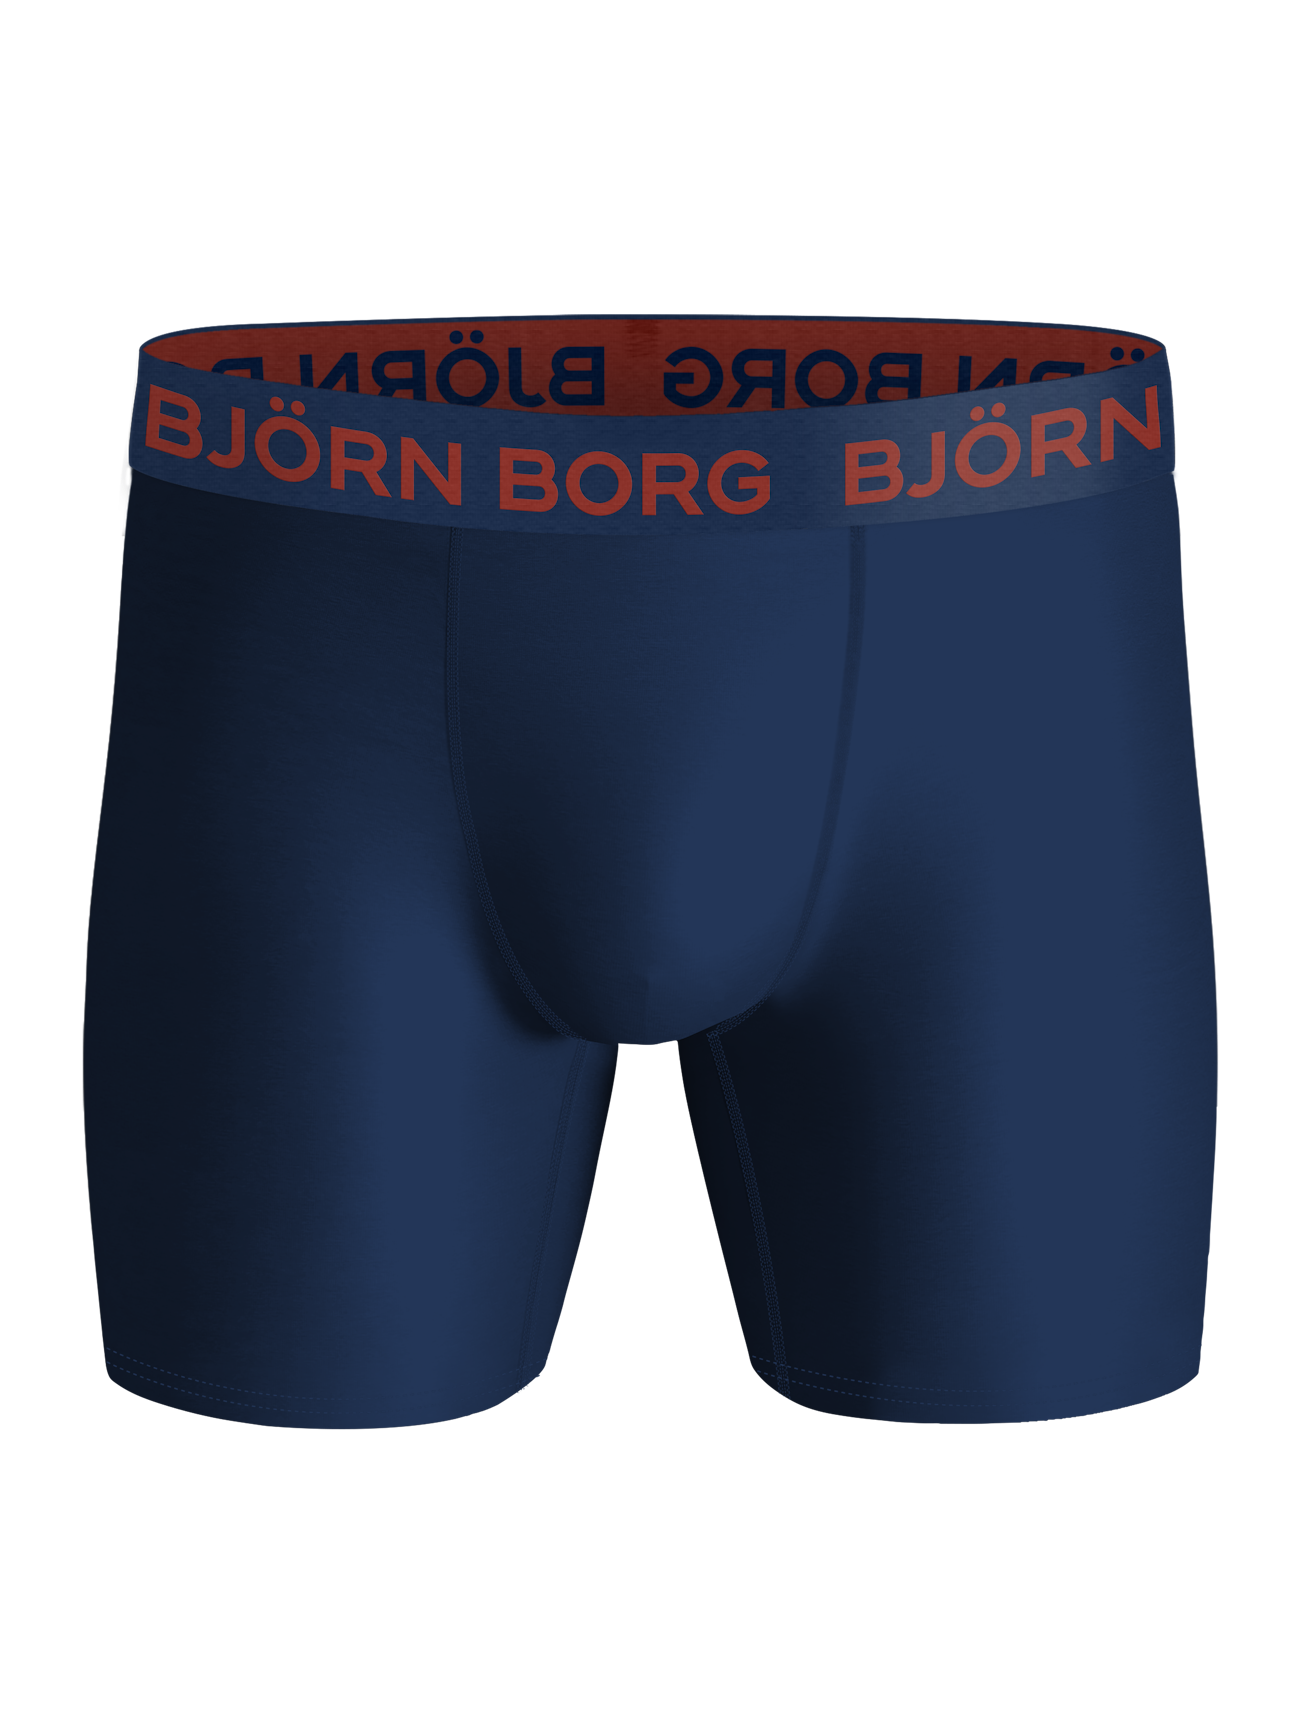 Björn Borg Performance Boxer 3-pack - Black, Navy Blue, Orange – Trunks and  Boxers